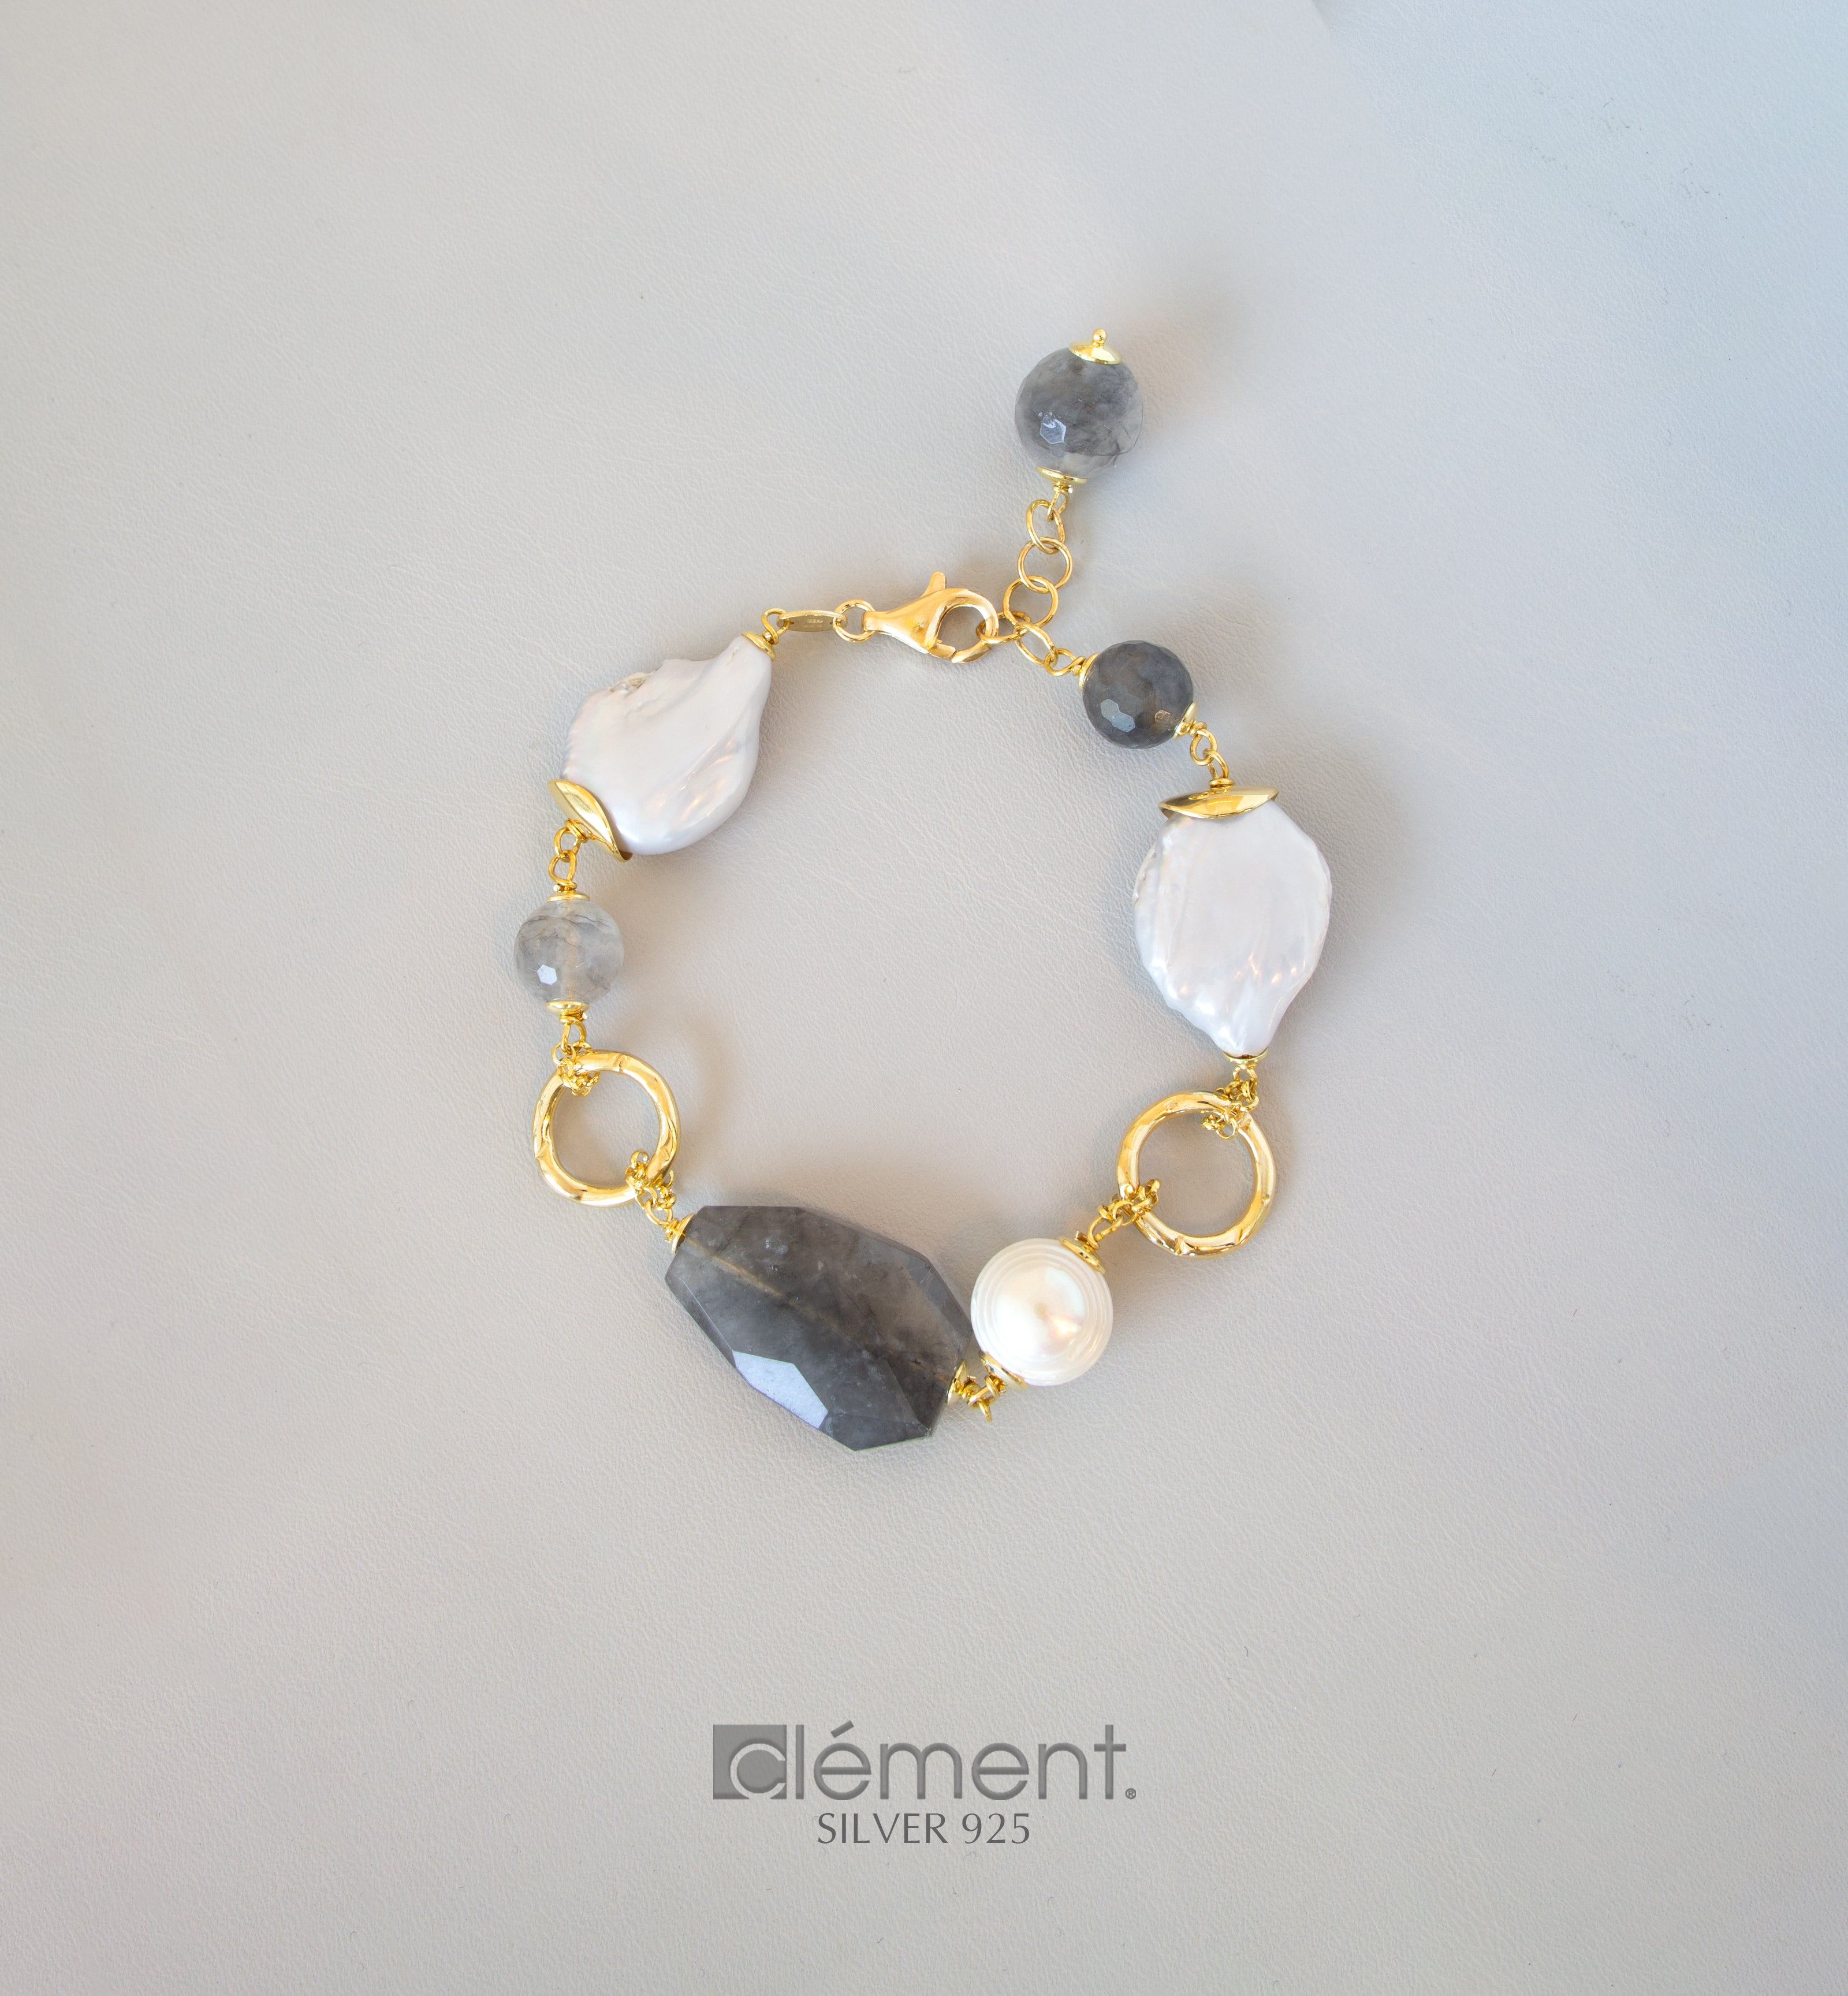 Silver 925 Semi-Precious Stones and Pearls Bracelet